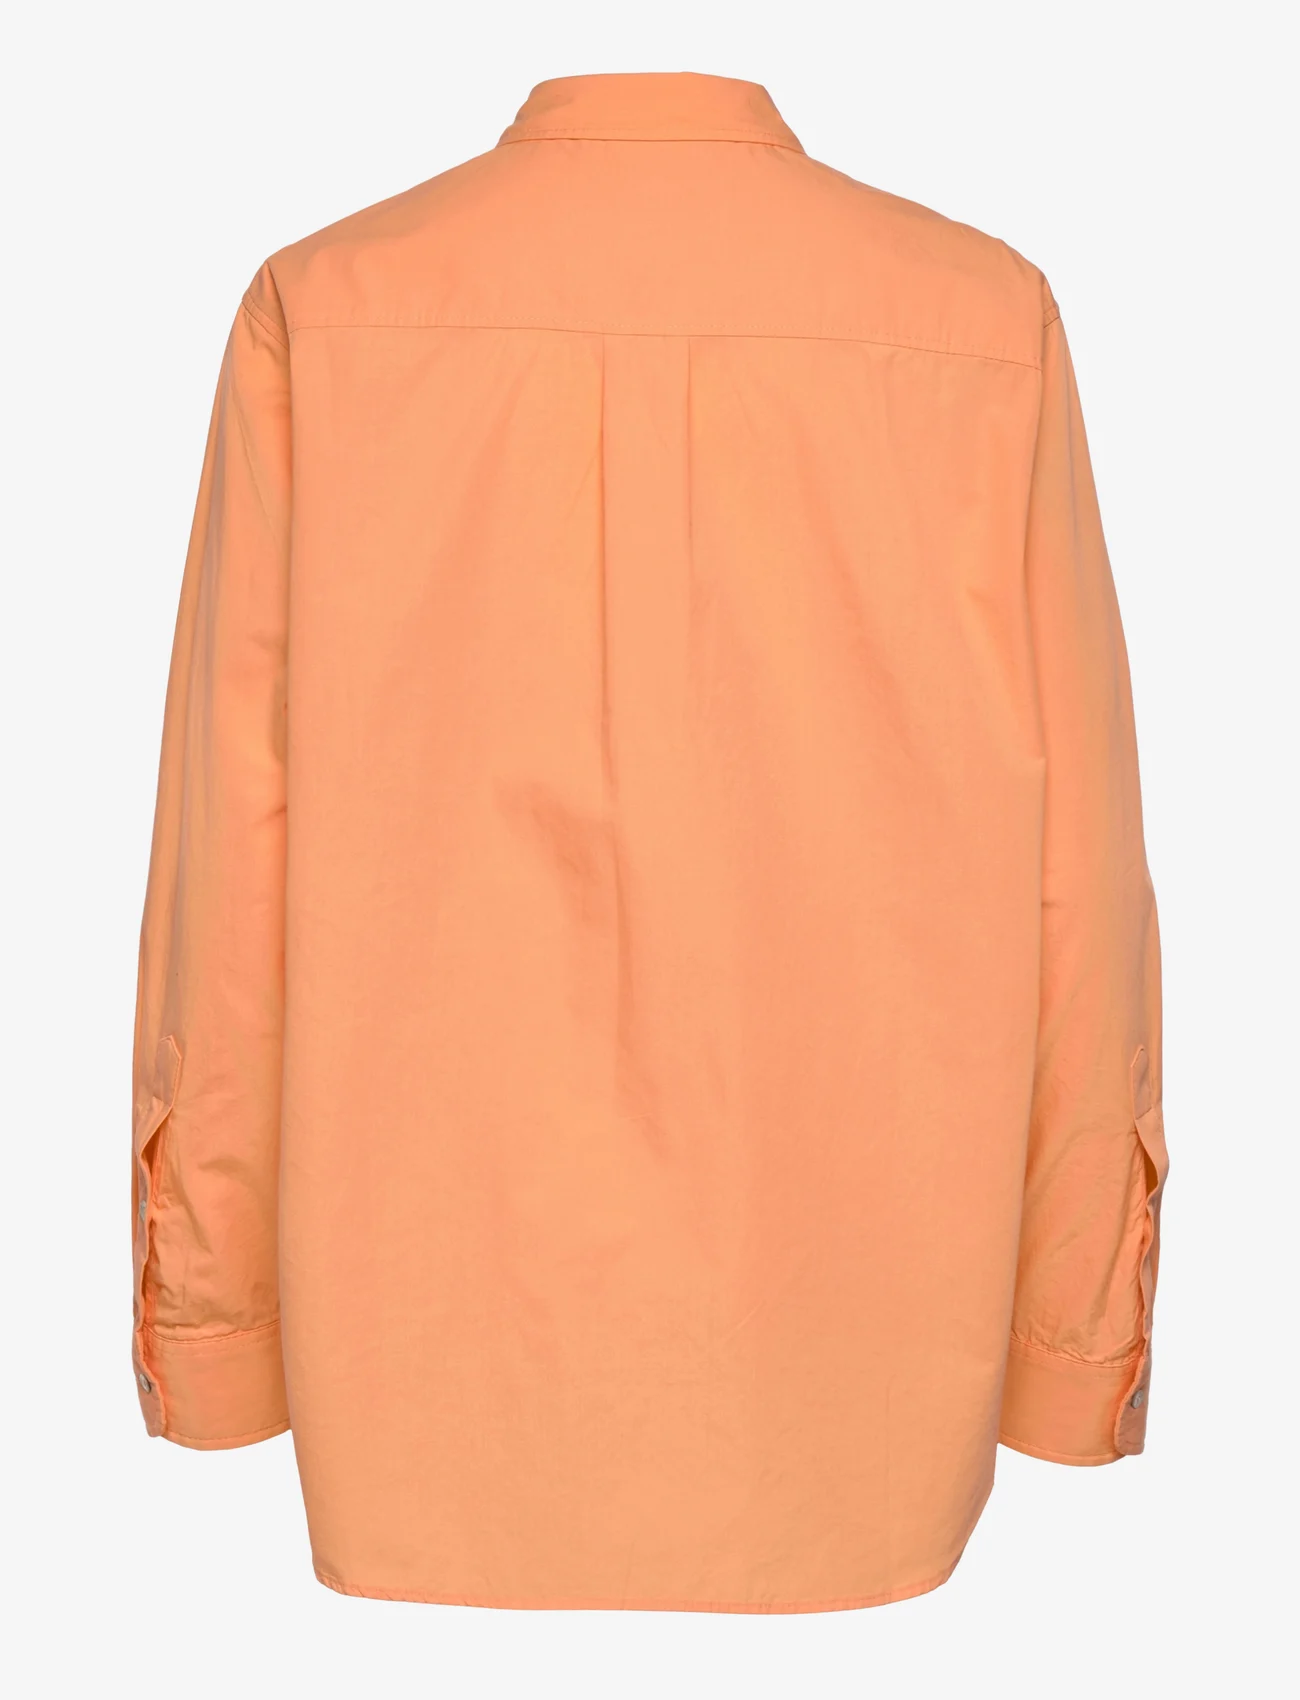 H2O Fagerholt - Afternoon Shirt - langærmede skjorter - peach - 1